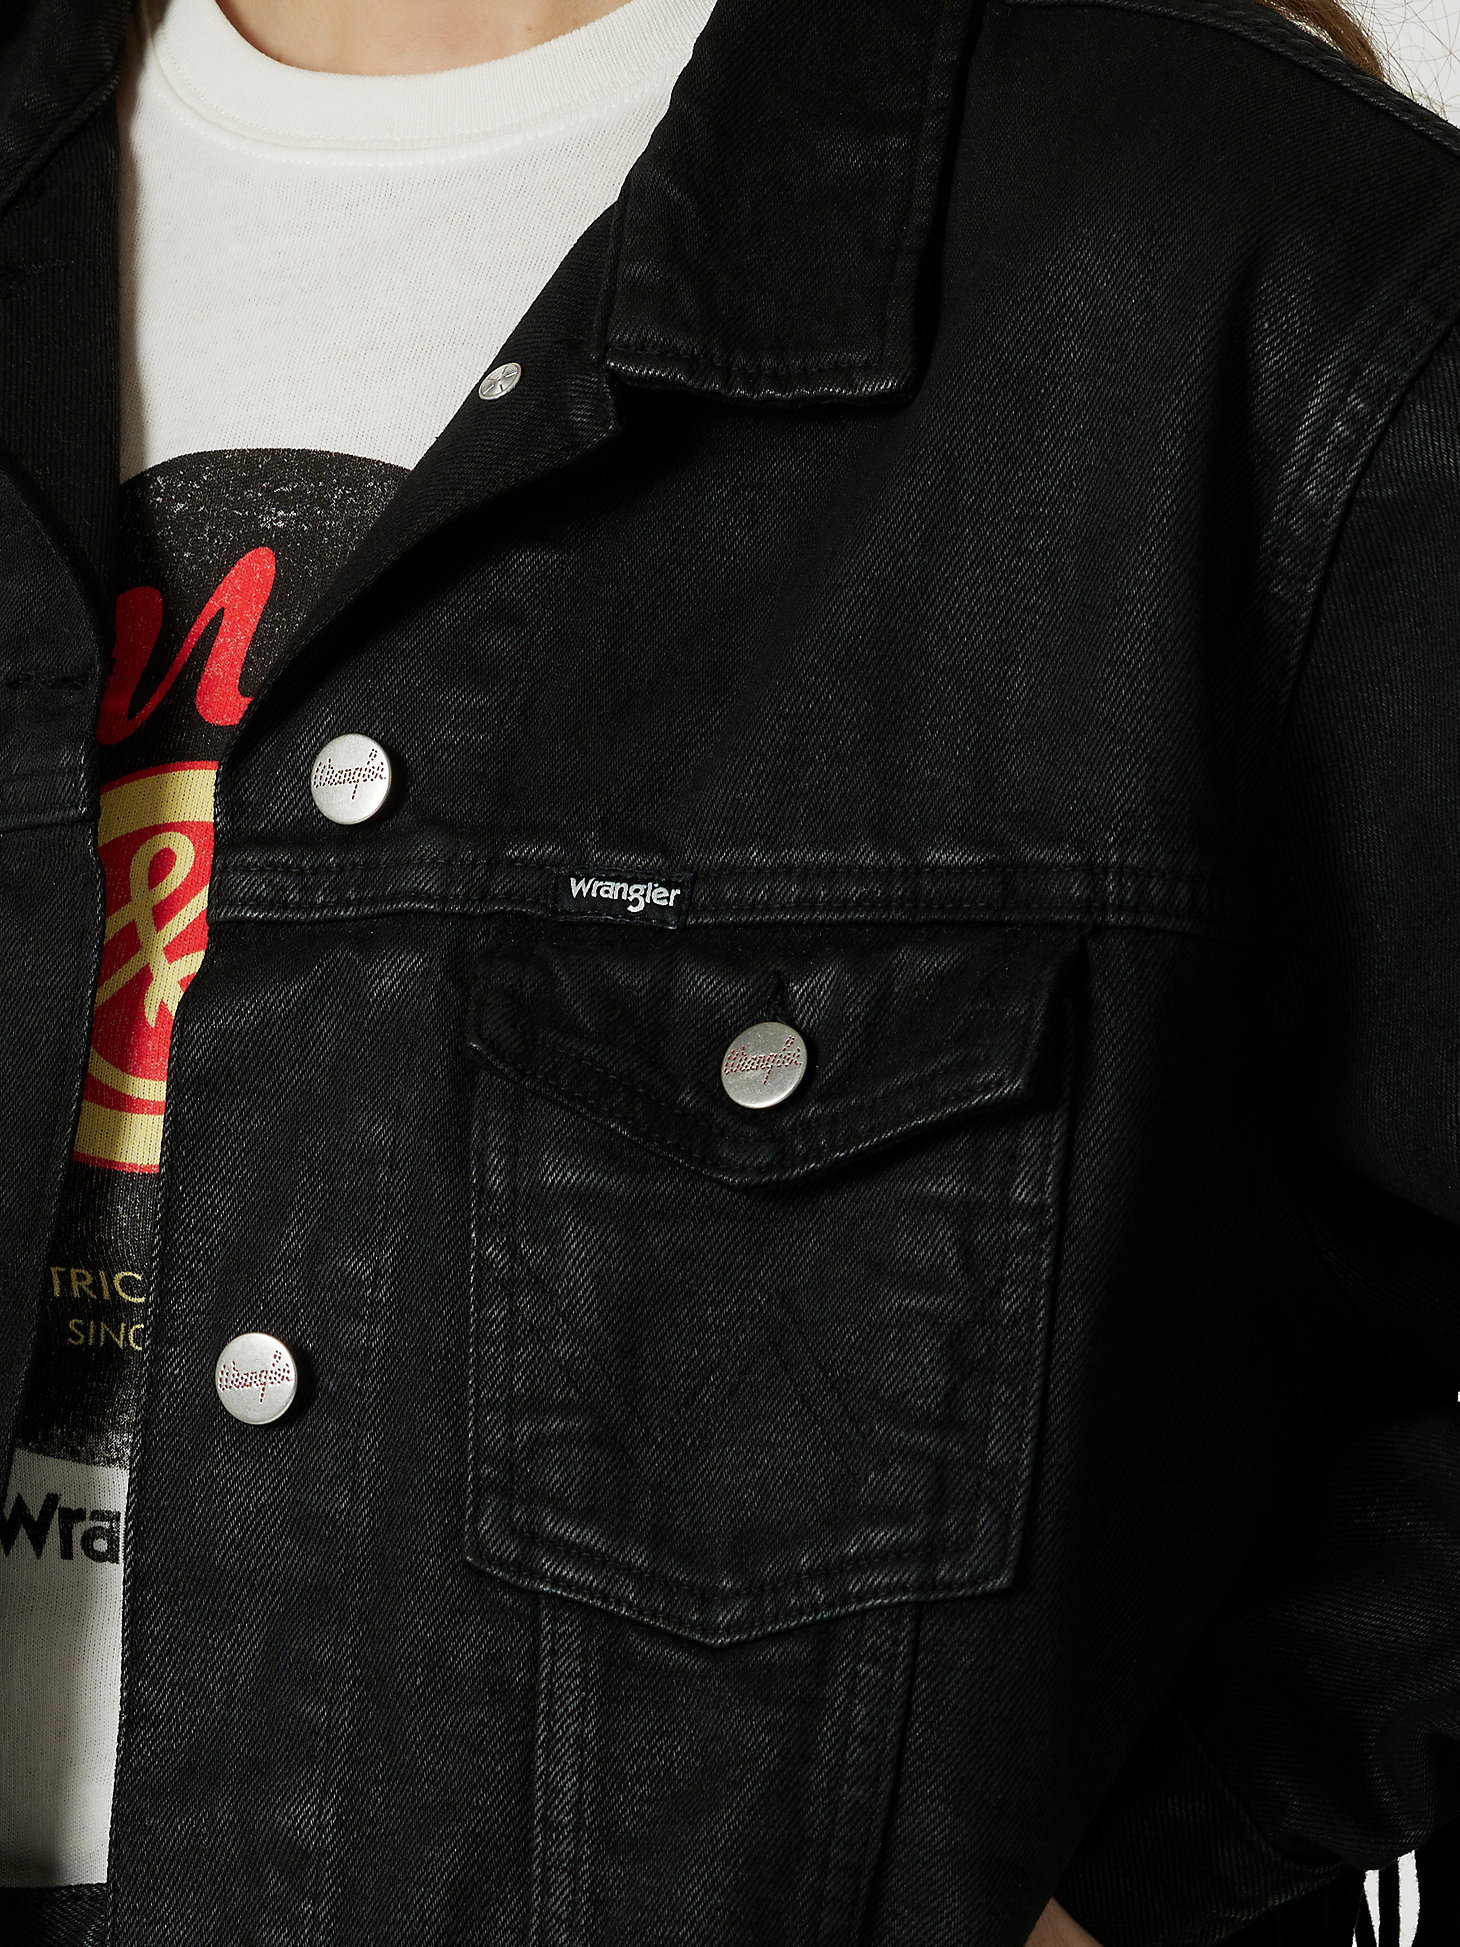 Wrangler x Fender Fringed Souvenir Jacket in Black alternative view 3